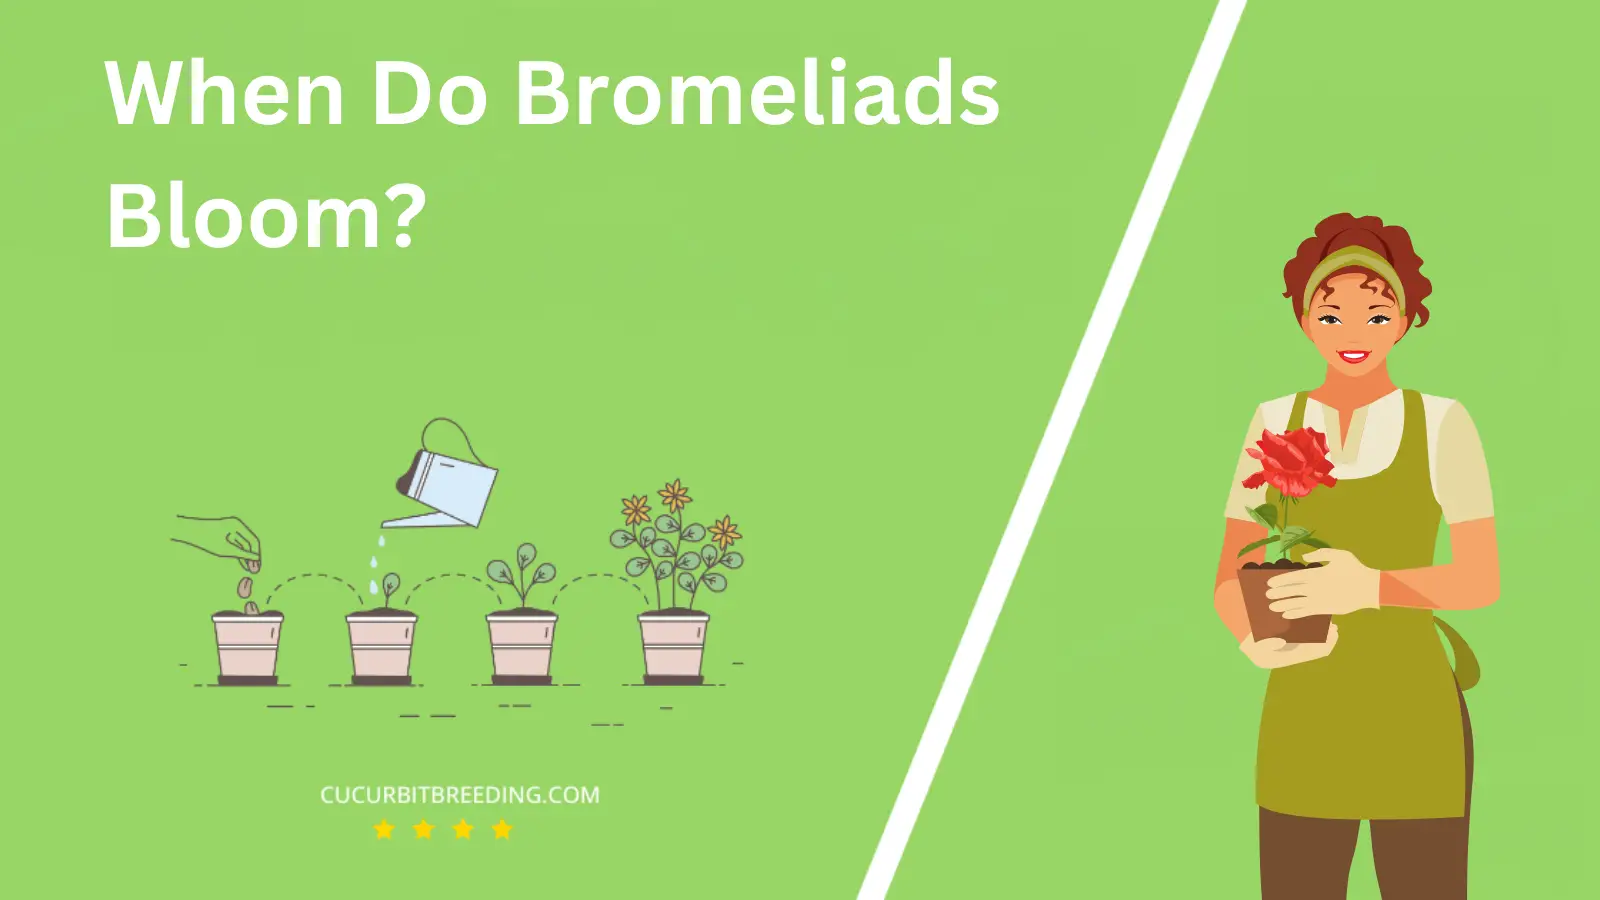 When Do Bromeliads Bloom?